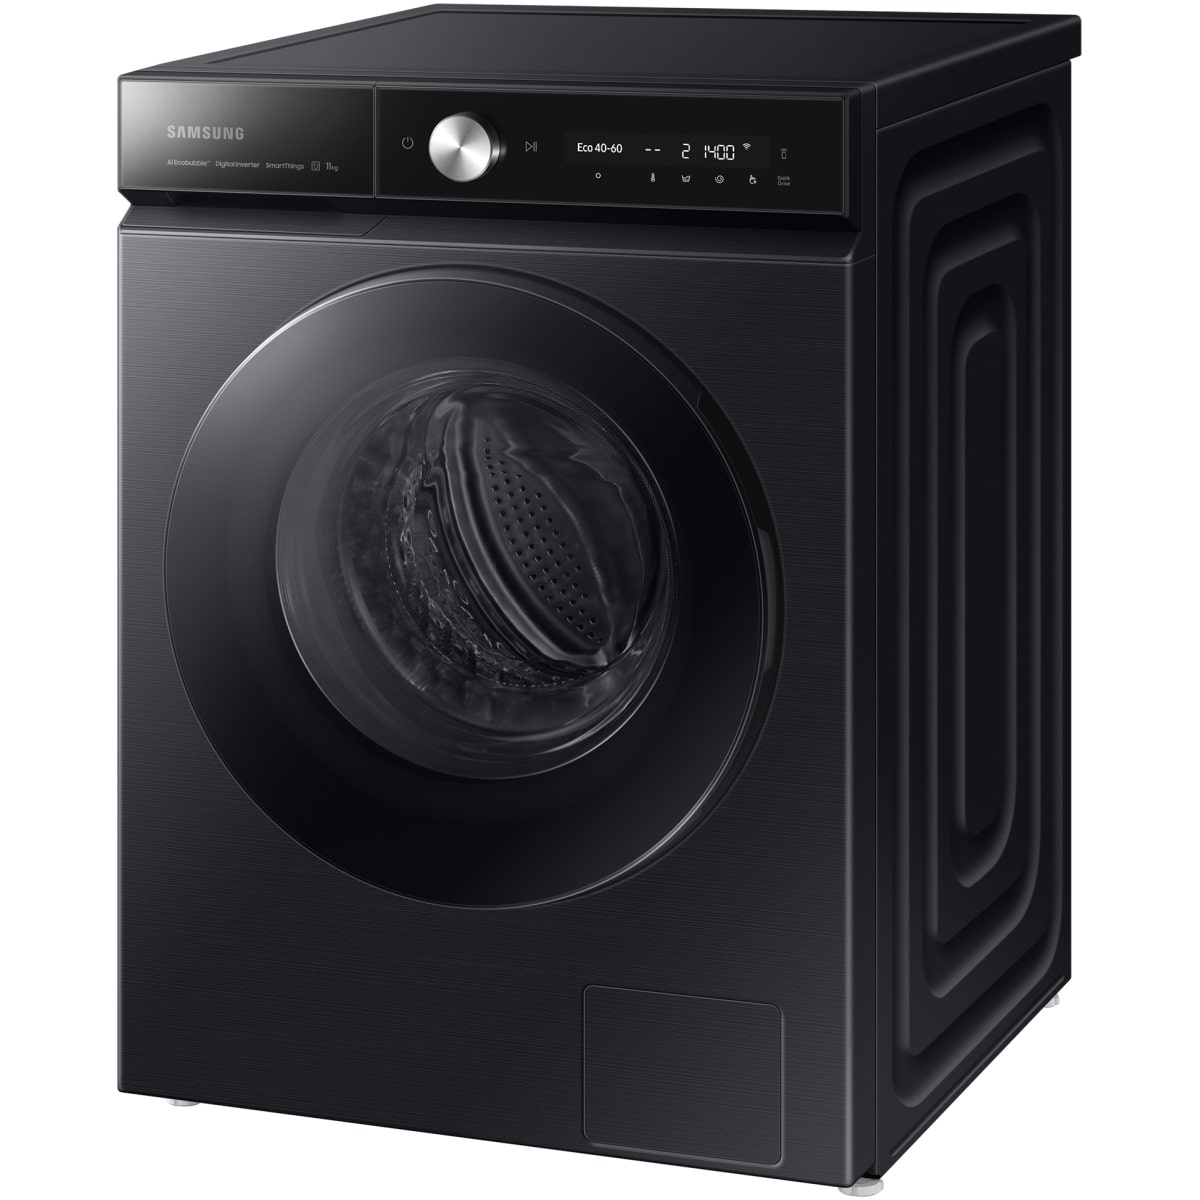 SAMSUNG Washing Machine 11Kg 23 Programs 1400RPM - Black